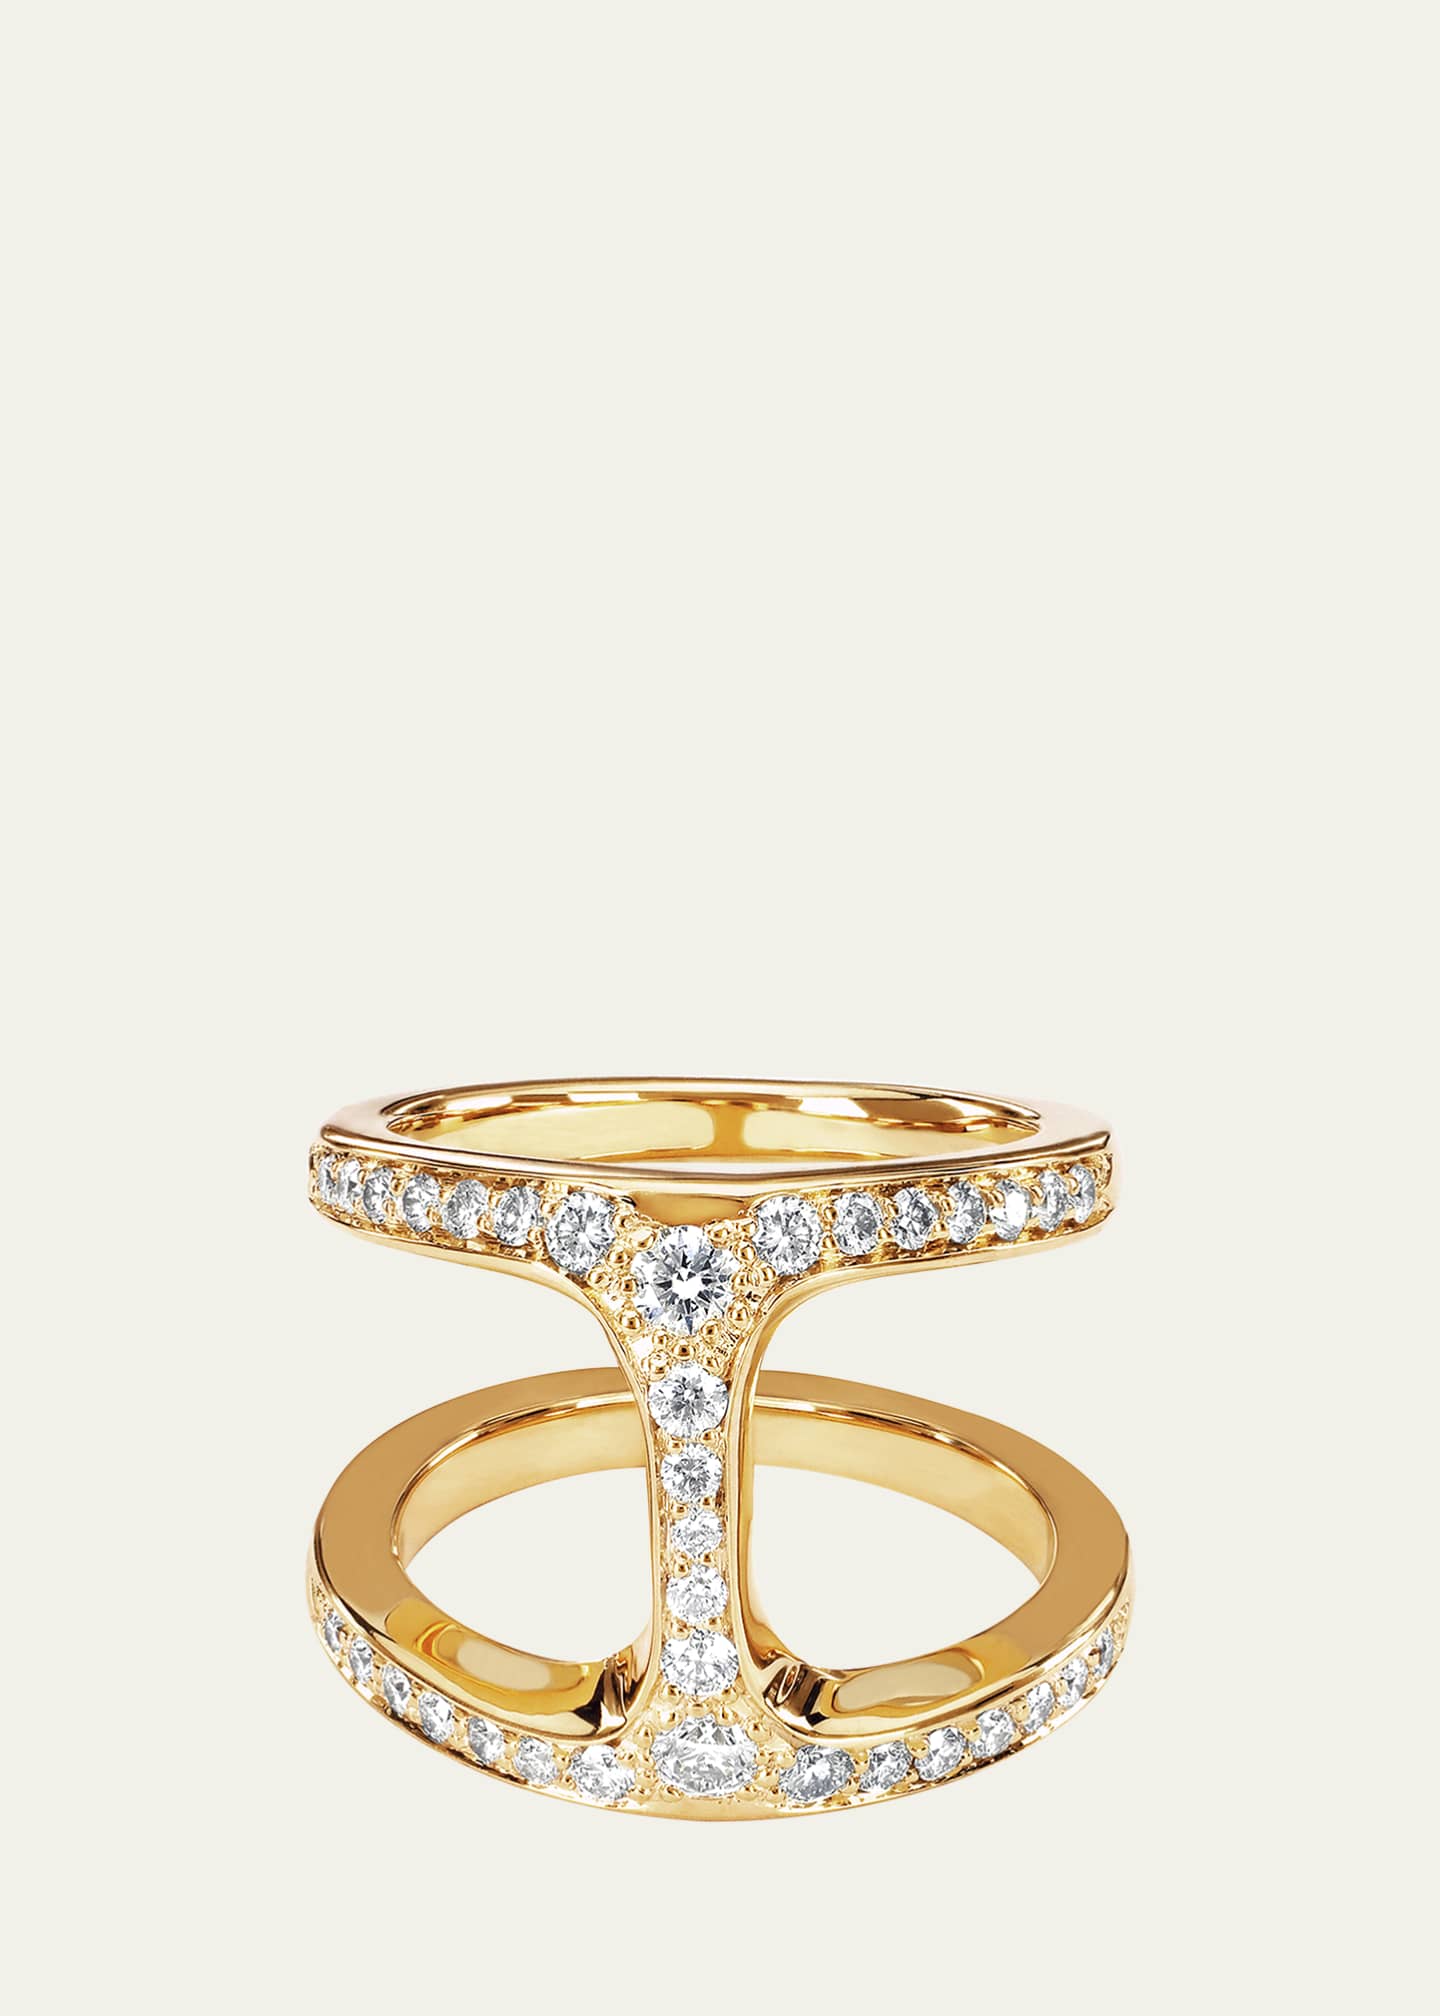 Hoorsenbuhs Dame Phantom Ring with Diamonds and 18k Yellow Gold